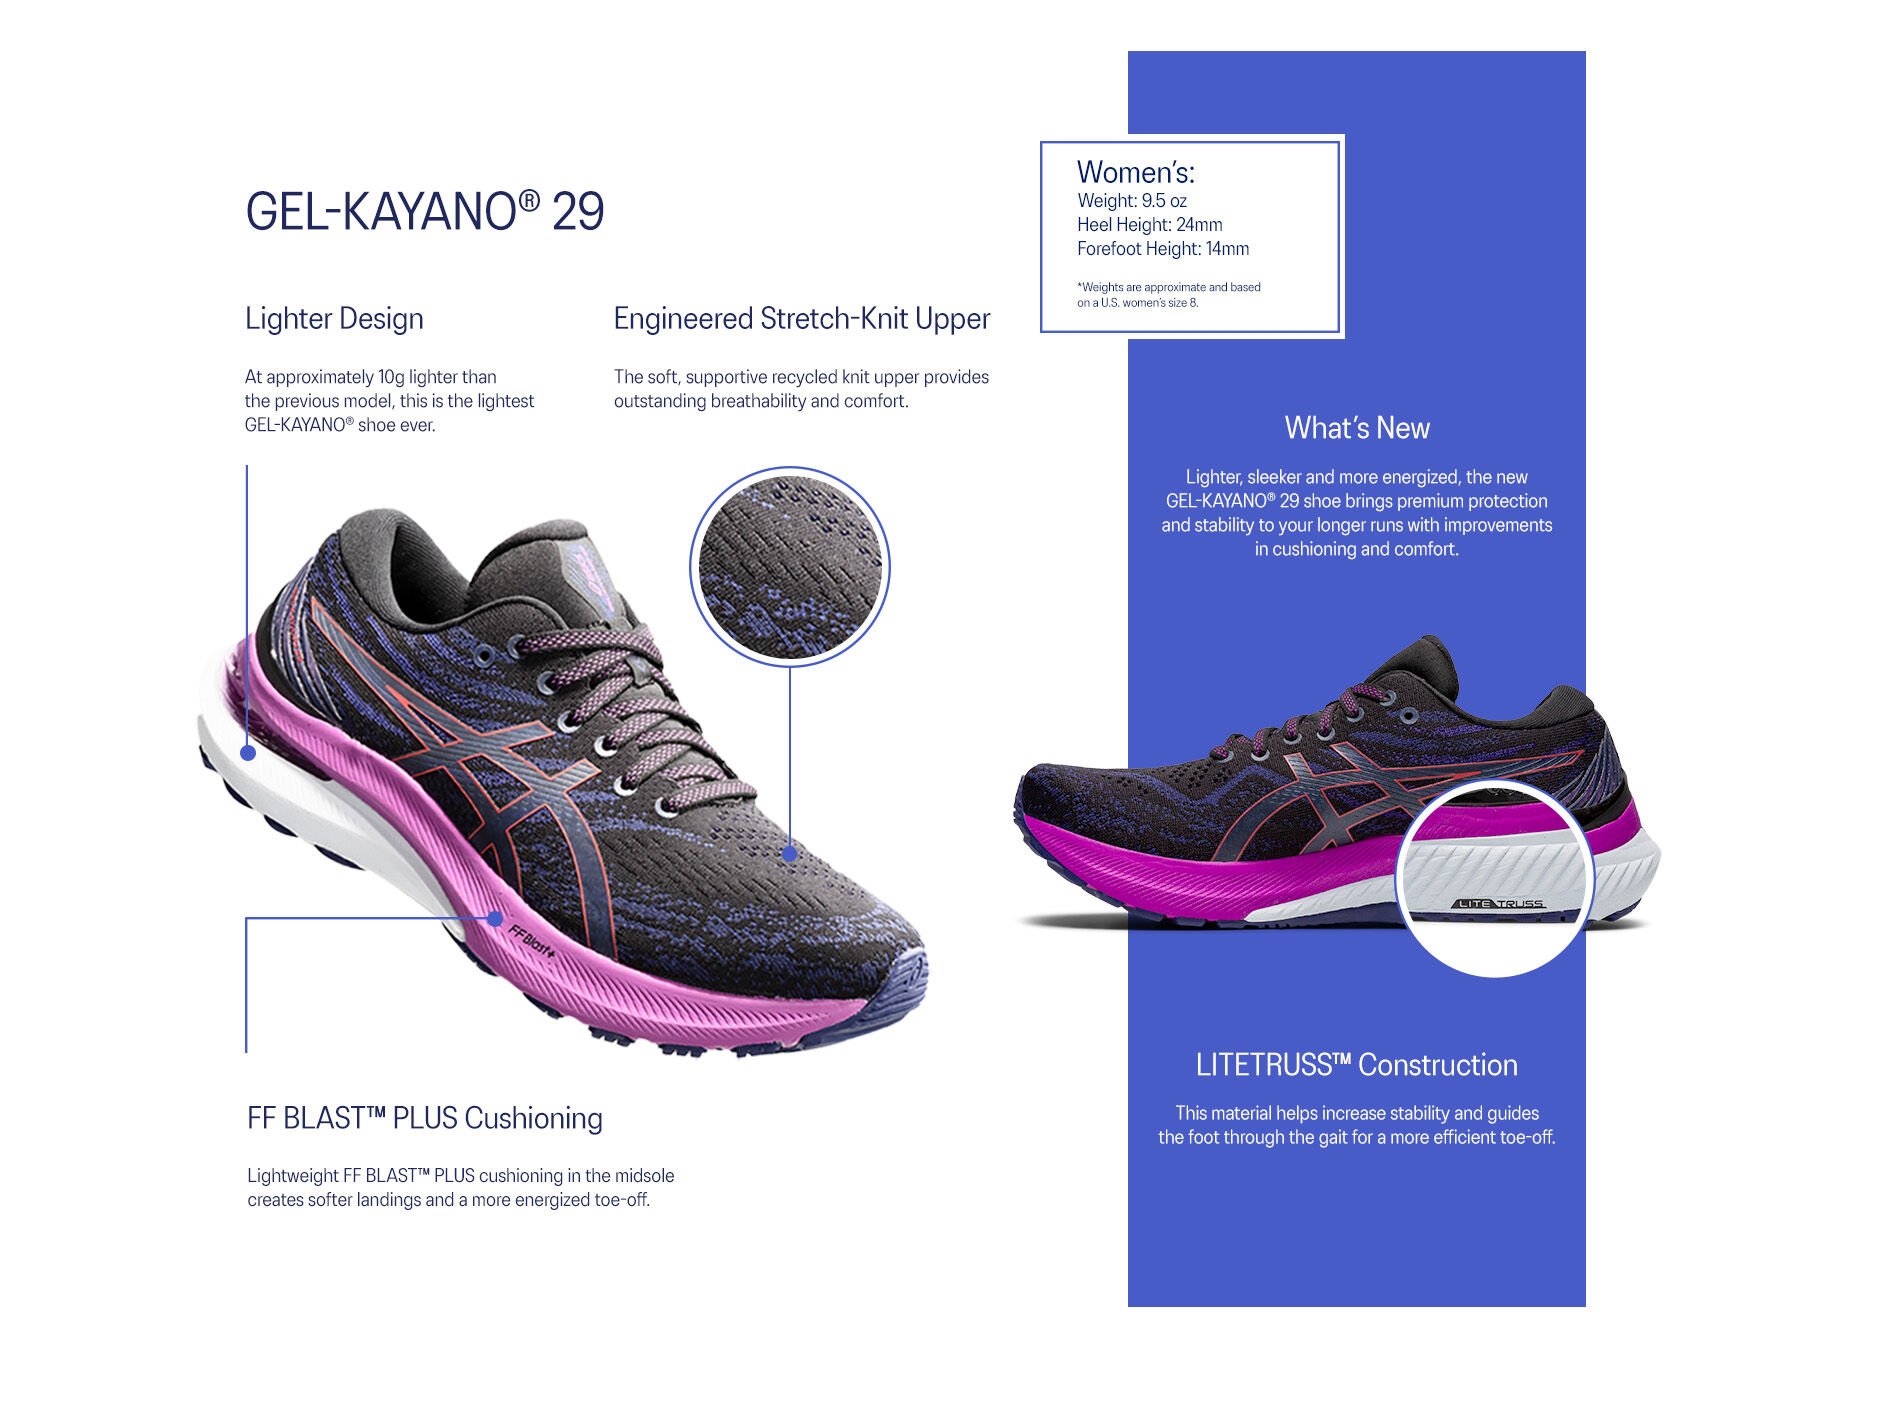 Women's GEL-KAYANO 29, Mineral Beige/Champagne, Running Shoes